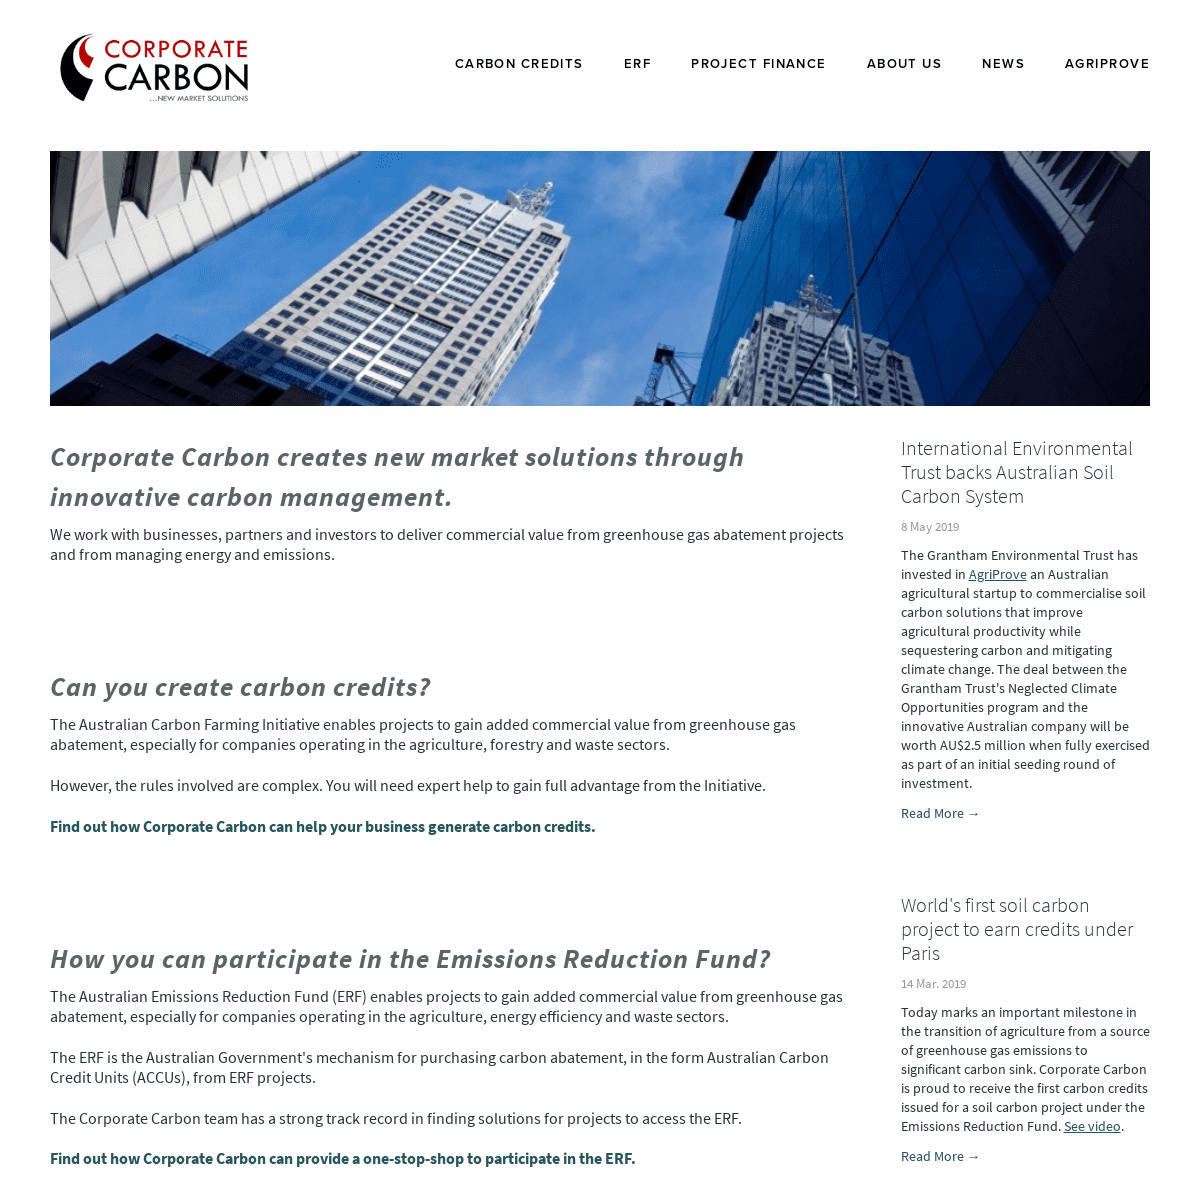 A complete backup of corporatecarbon.com.au